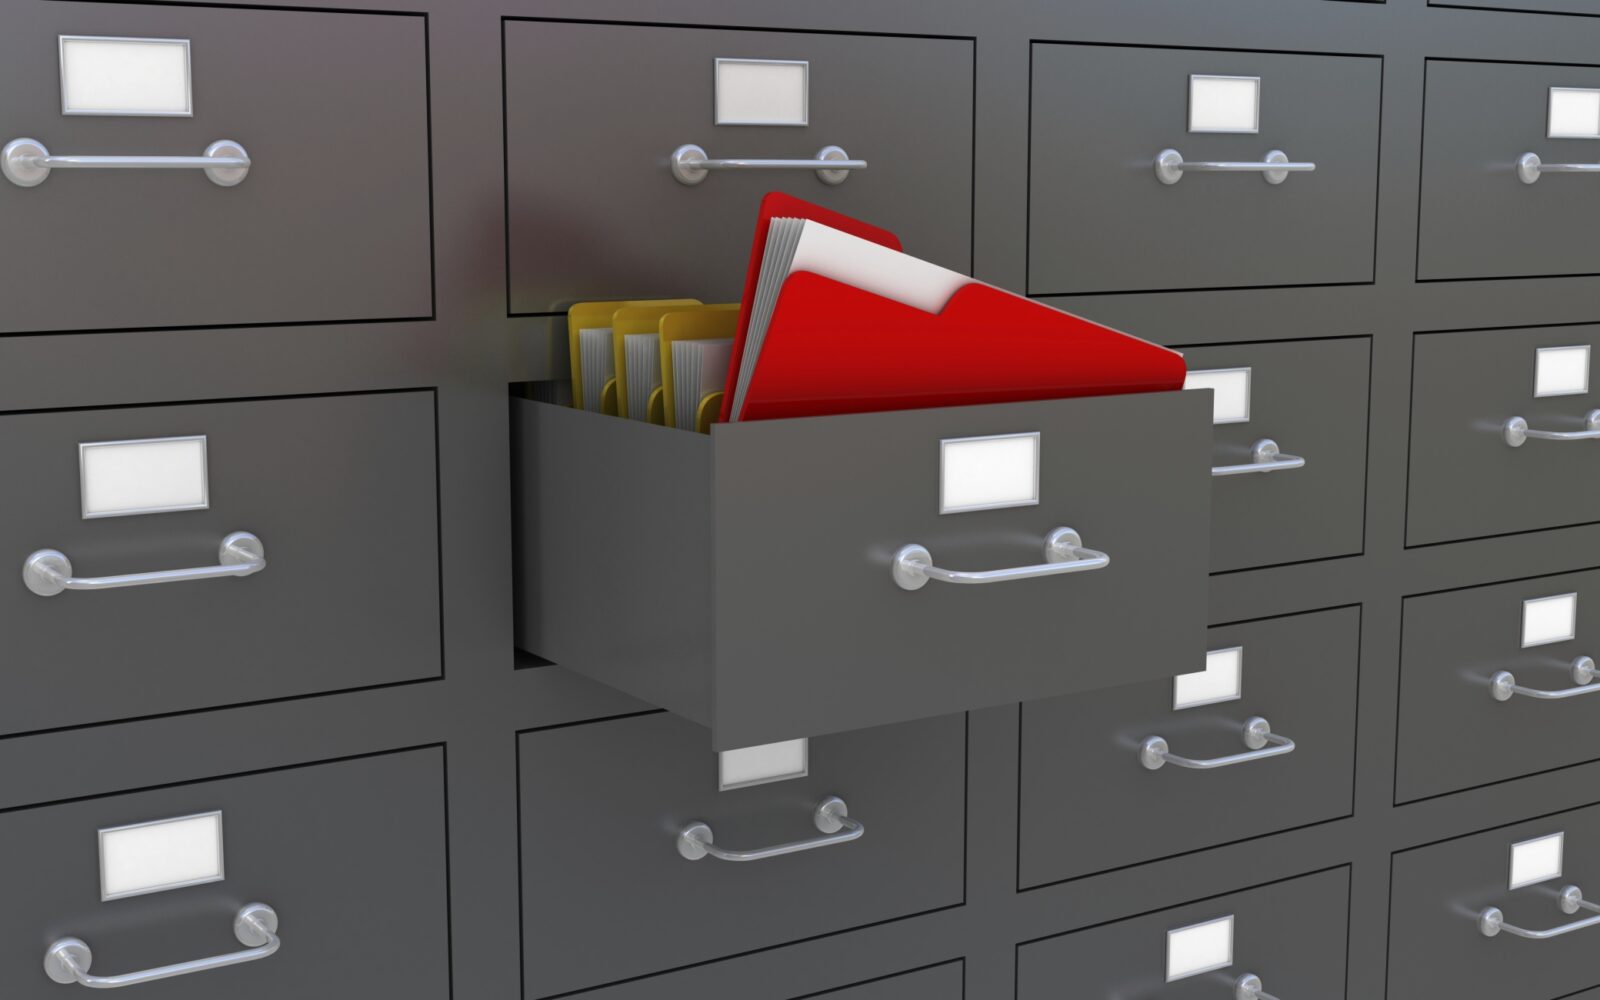 Folders for data storage